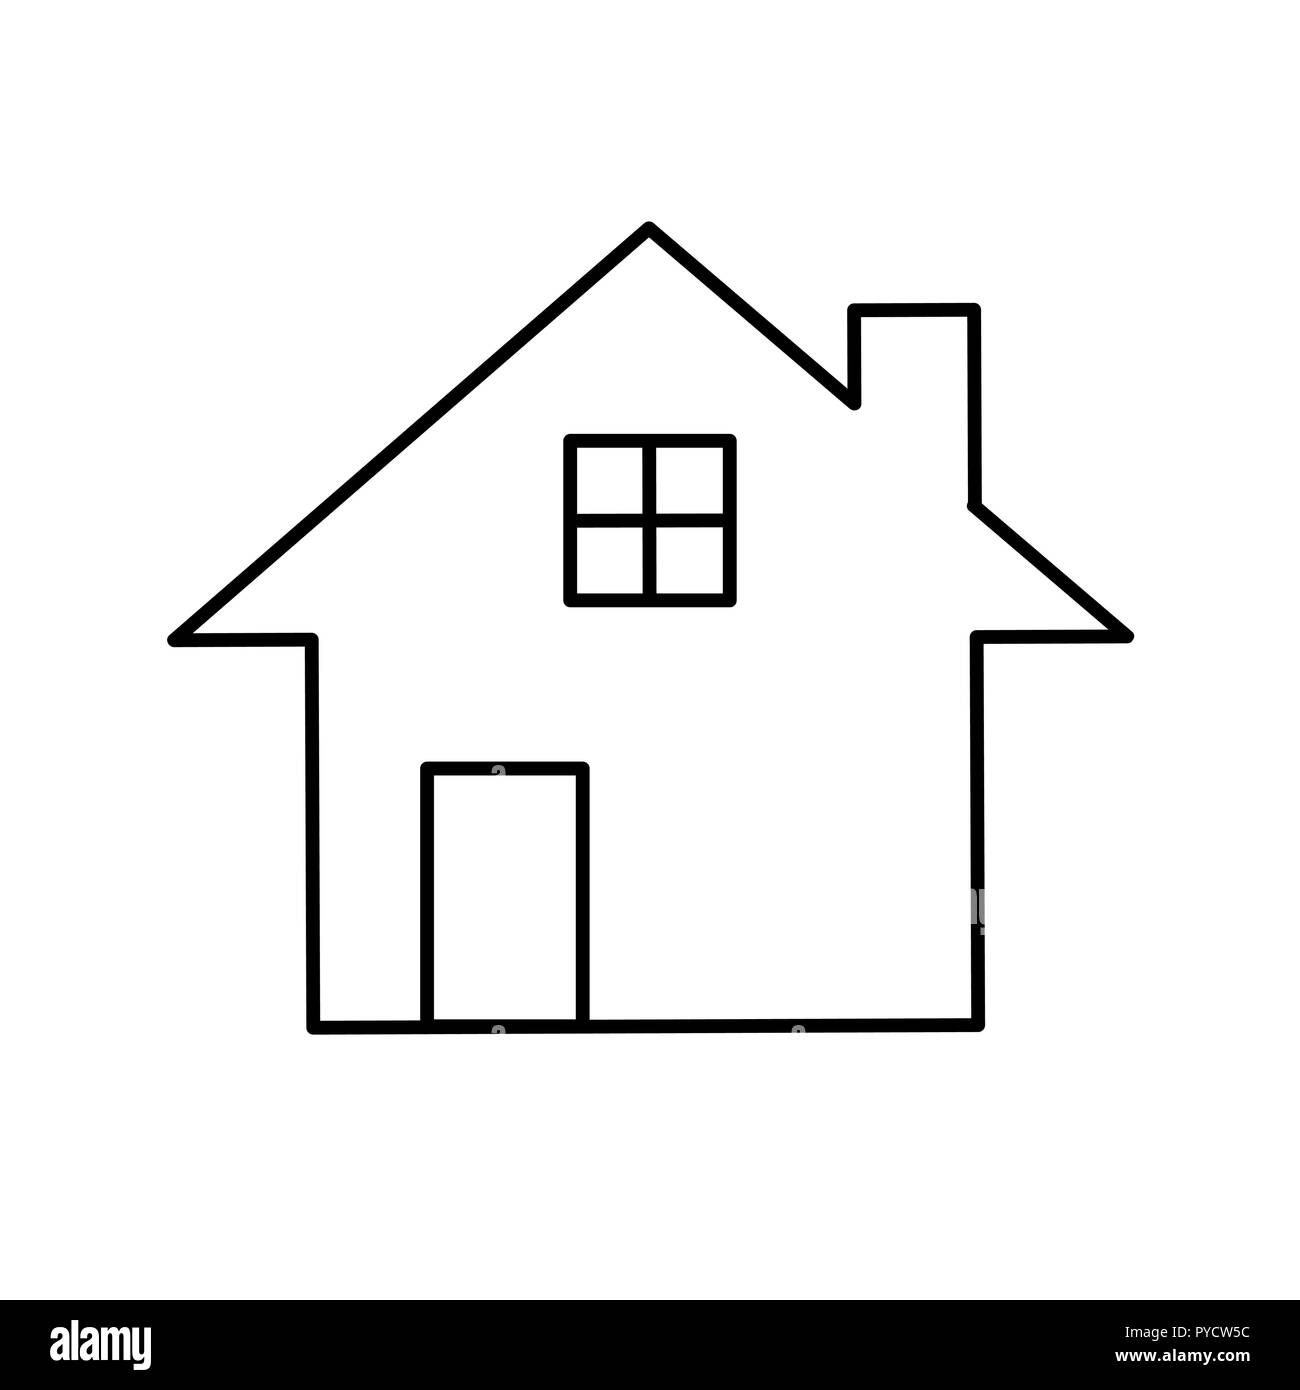 simple house illustration